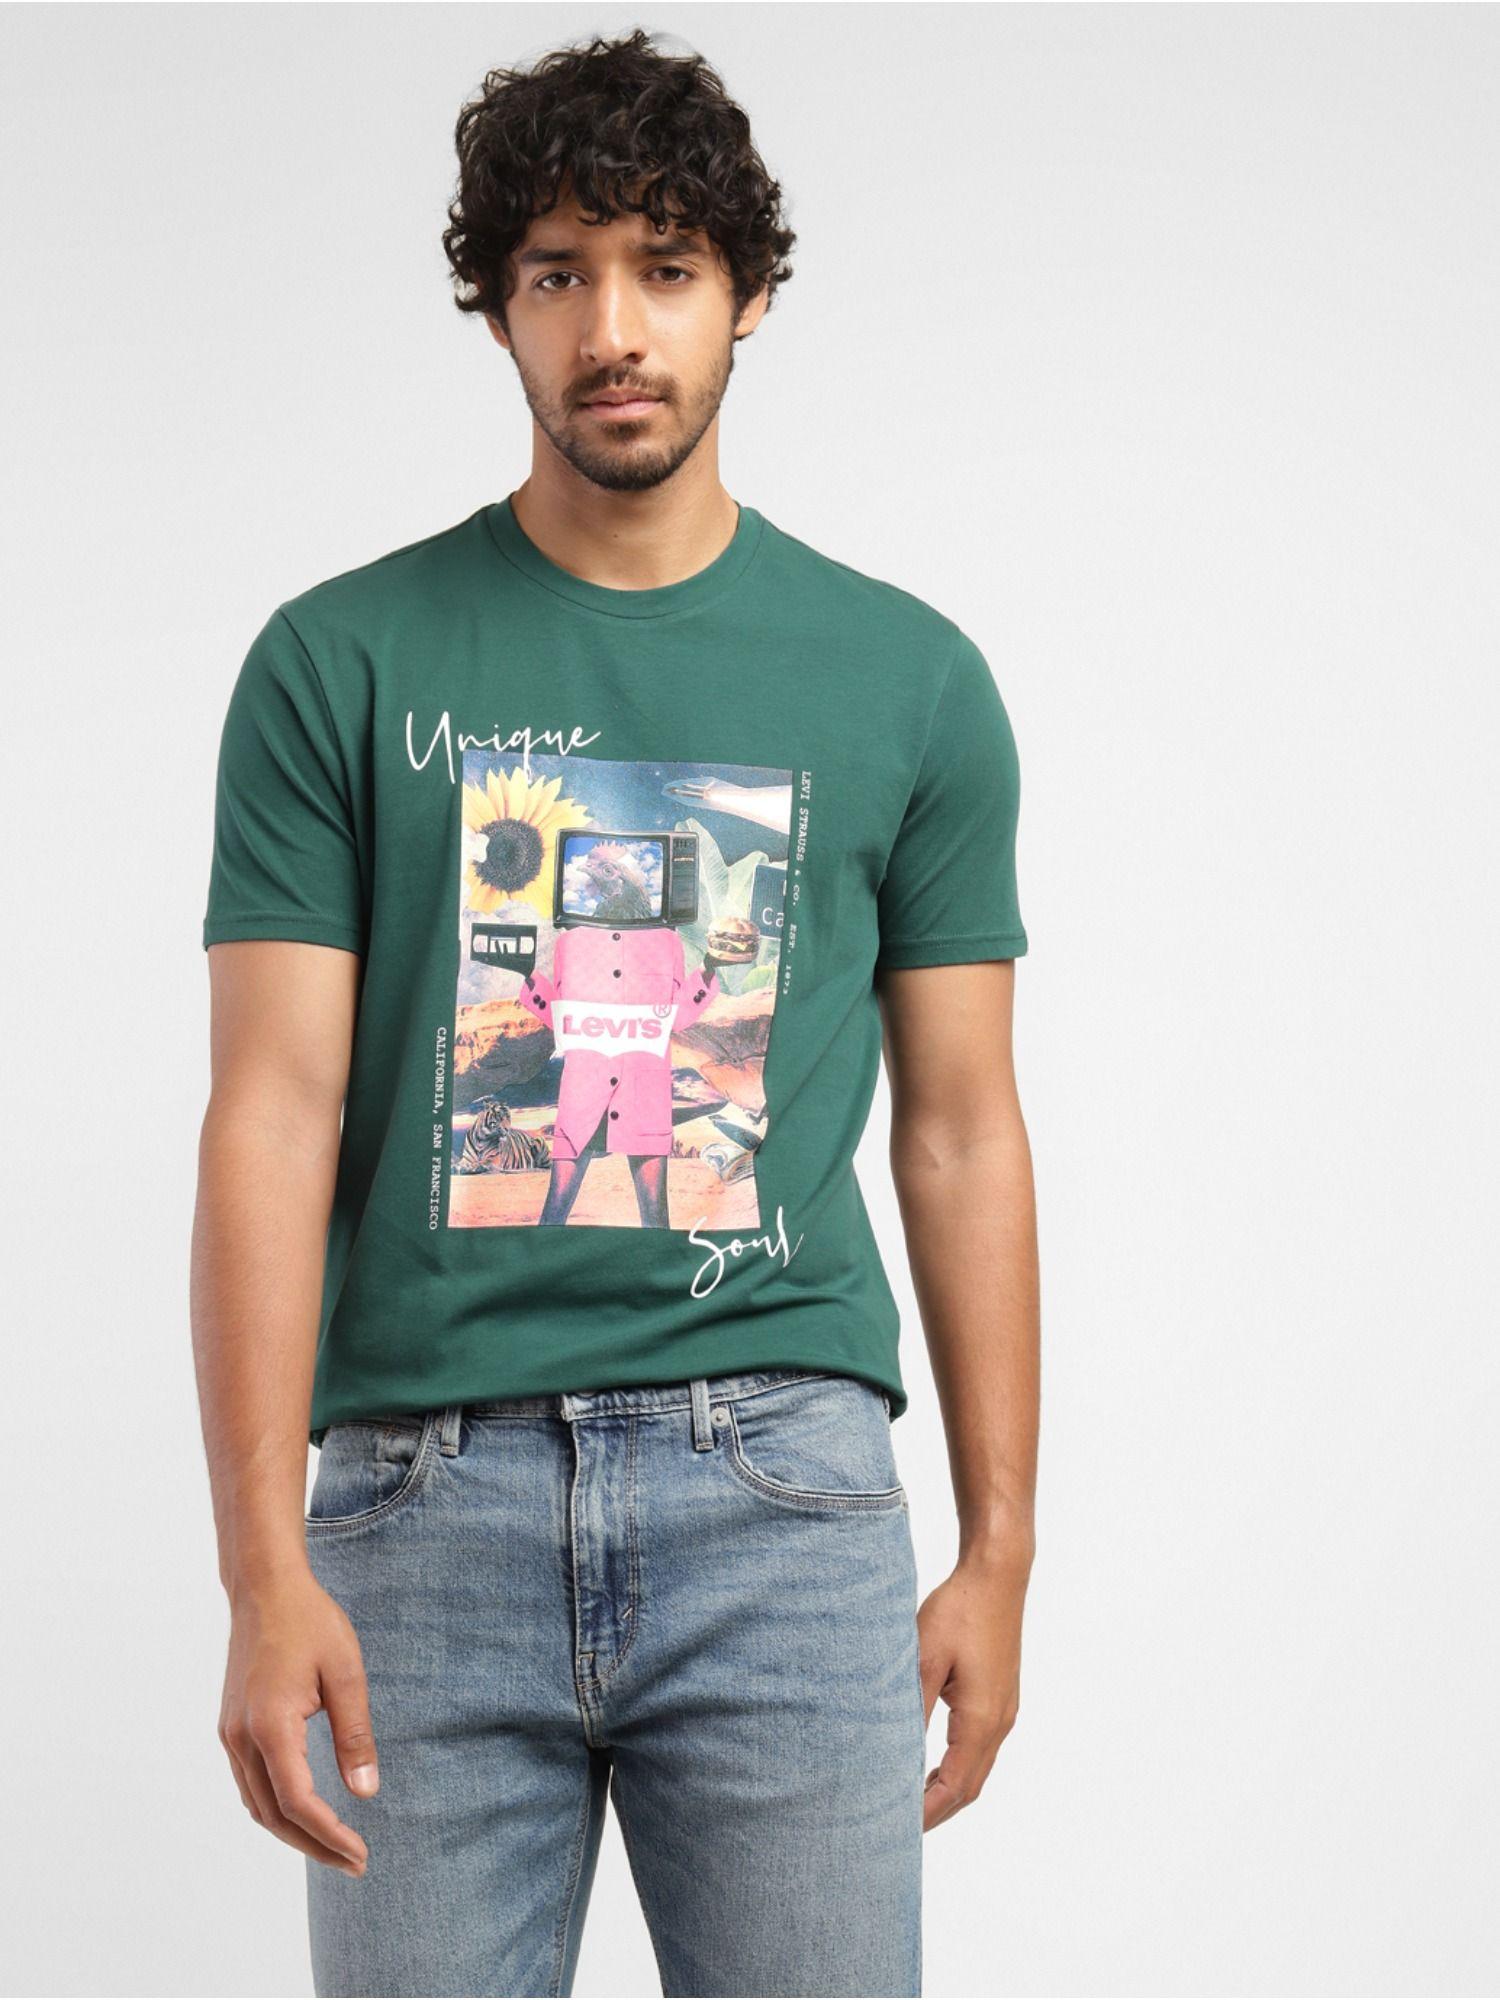 men's green graphic printed crew neck t-shirt